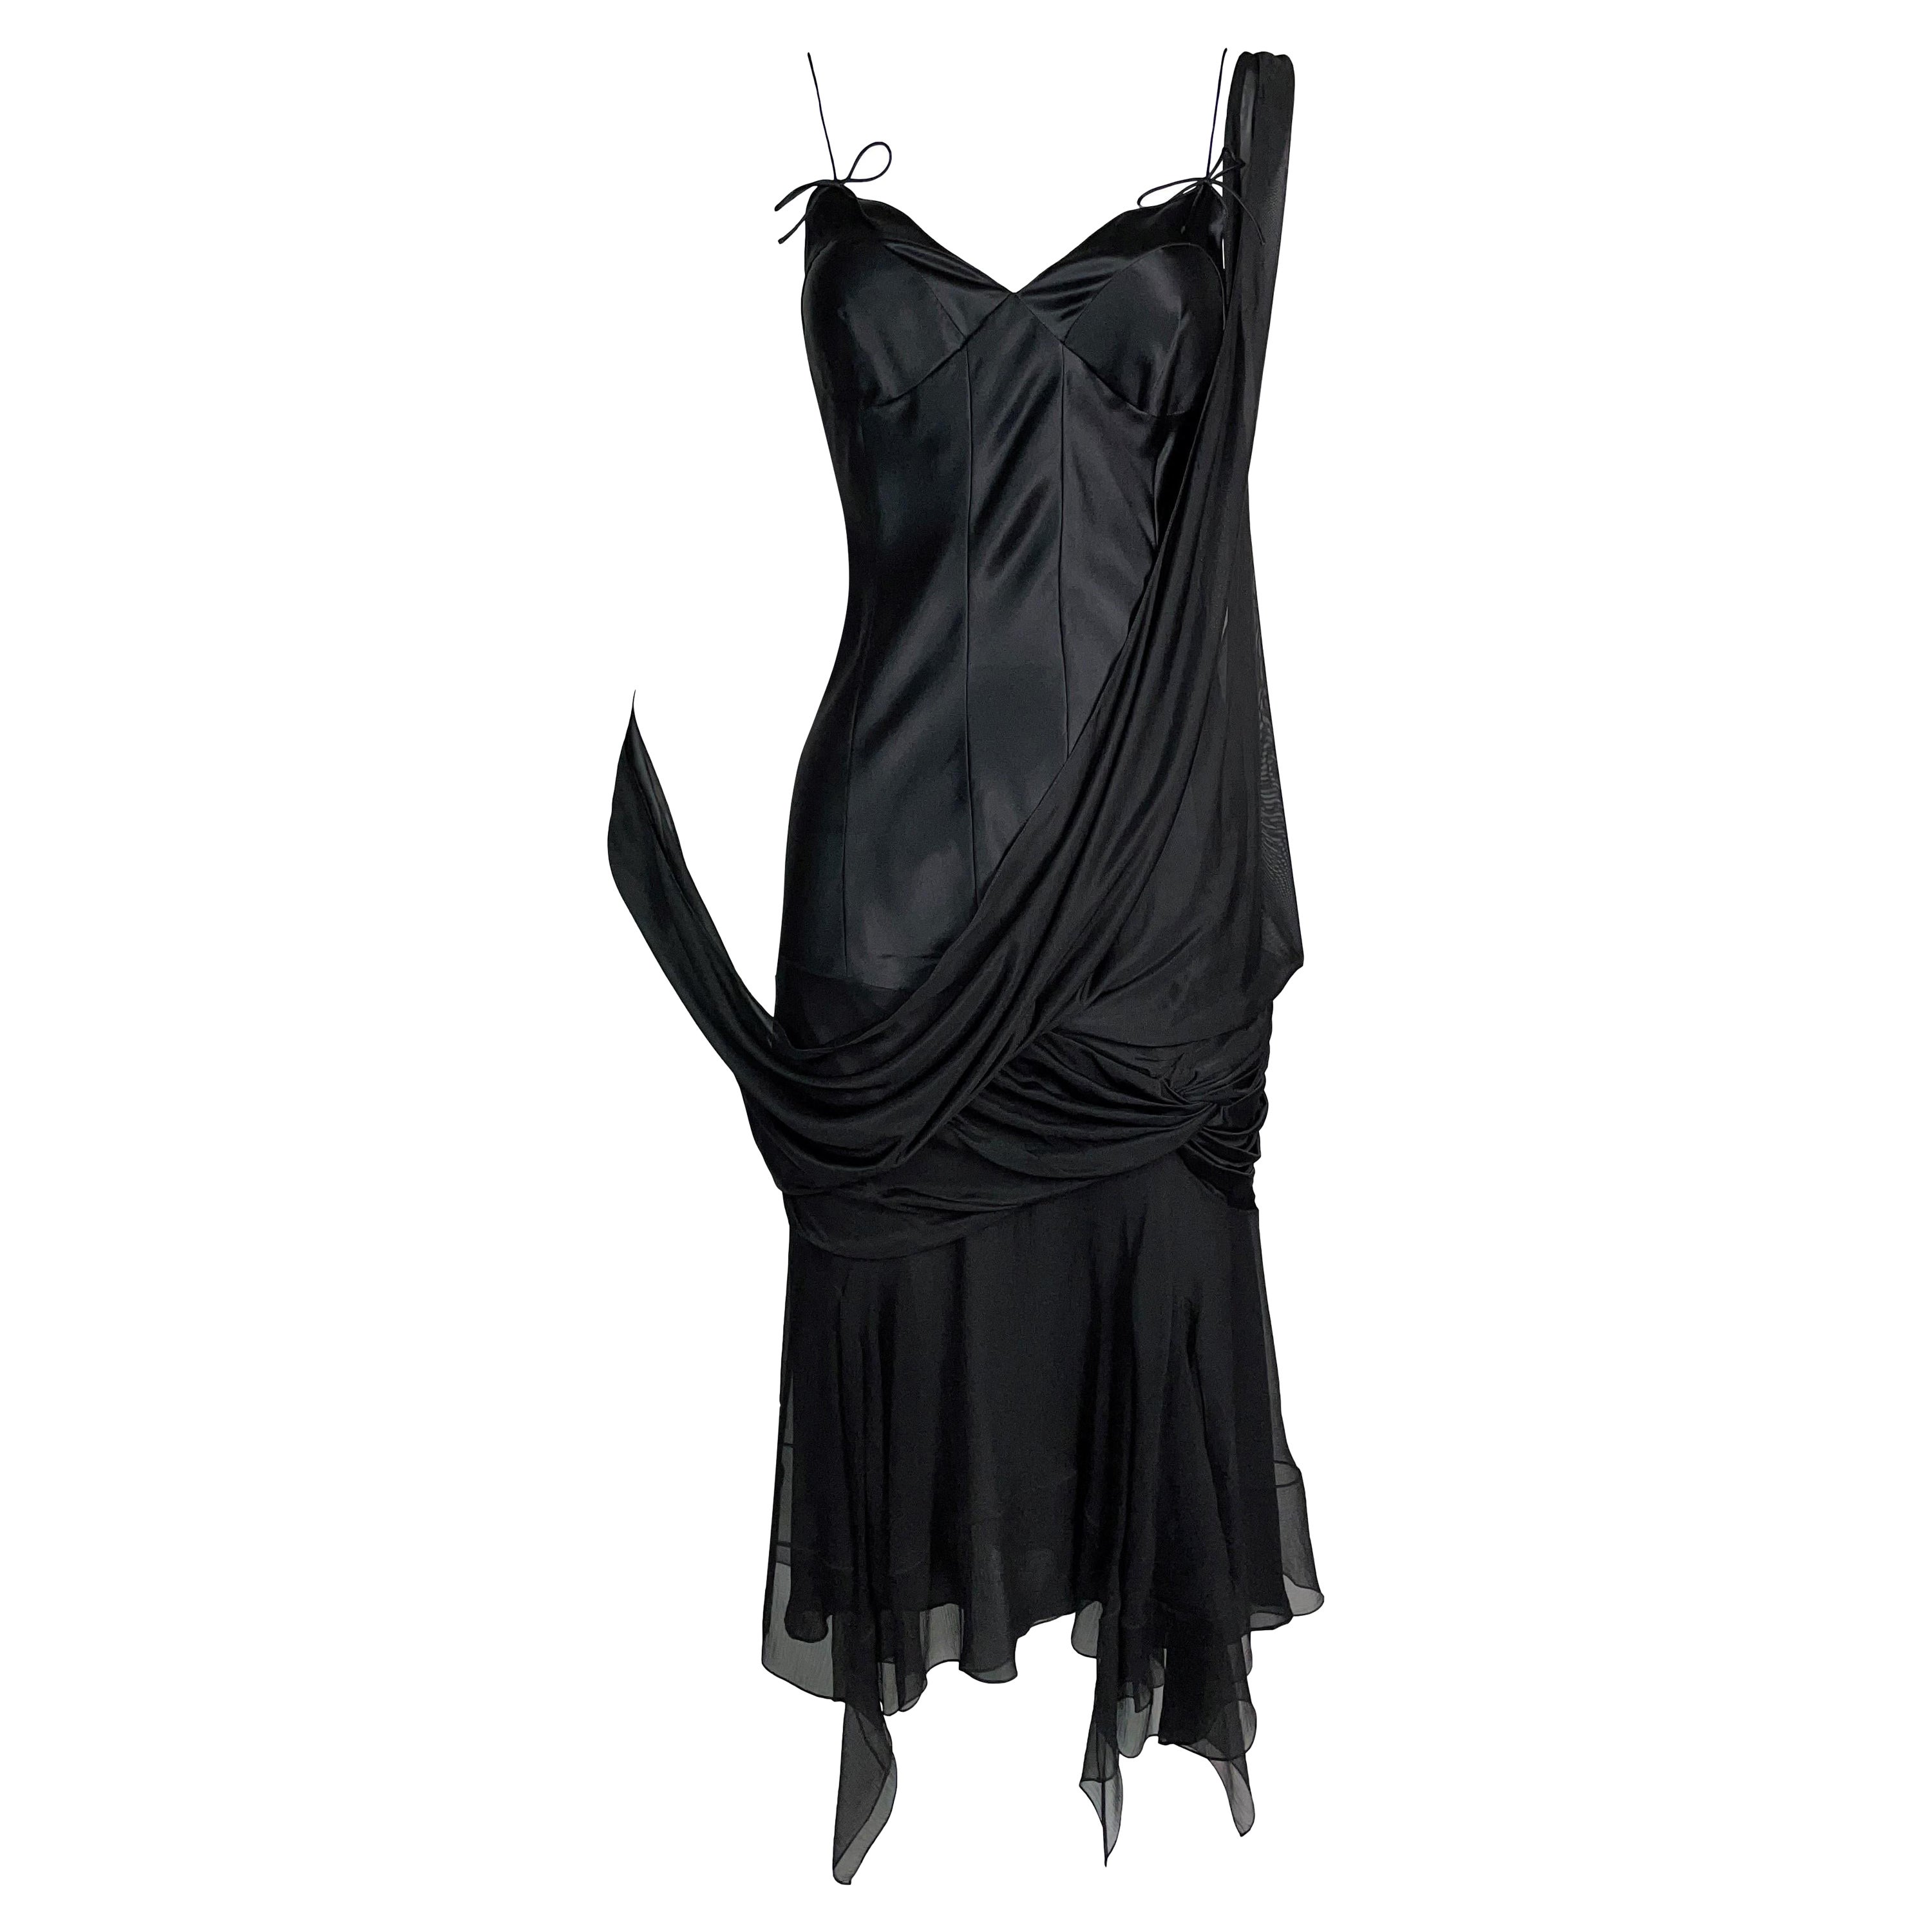 S/S 2004 Christian Dior John Galliano Black 20's Style Drop Waist Silk Dress